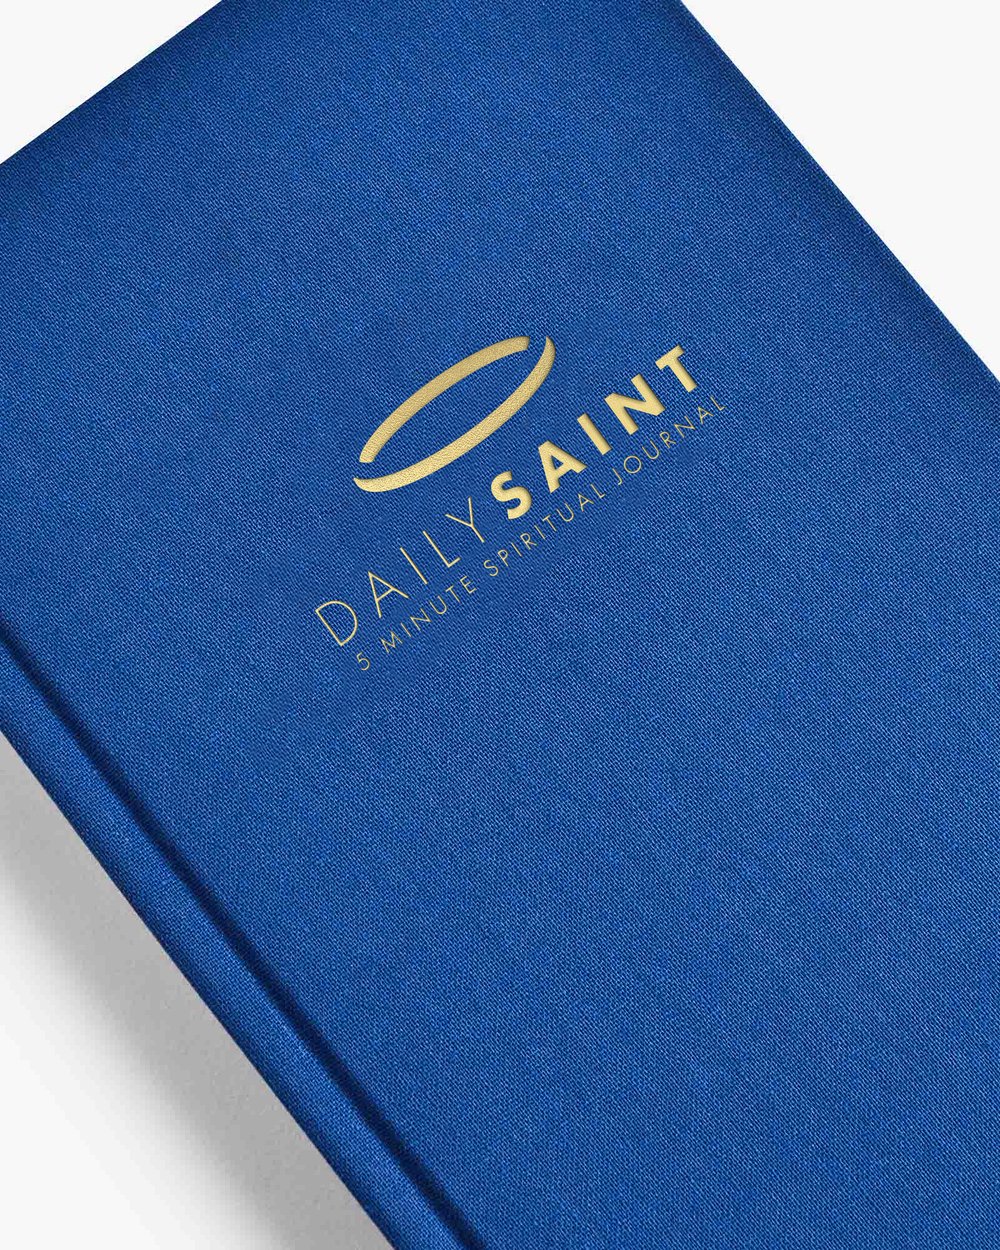 DailySaint  5-Minute Spiritual Journal — The Saintmaker Catholic